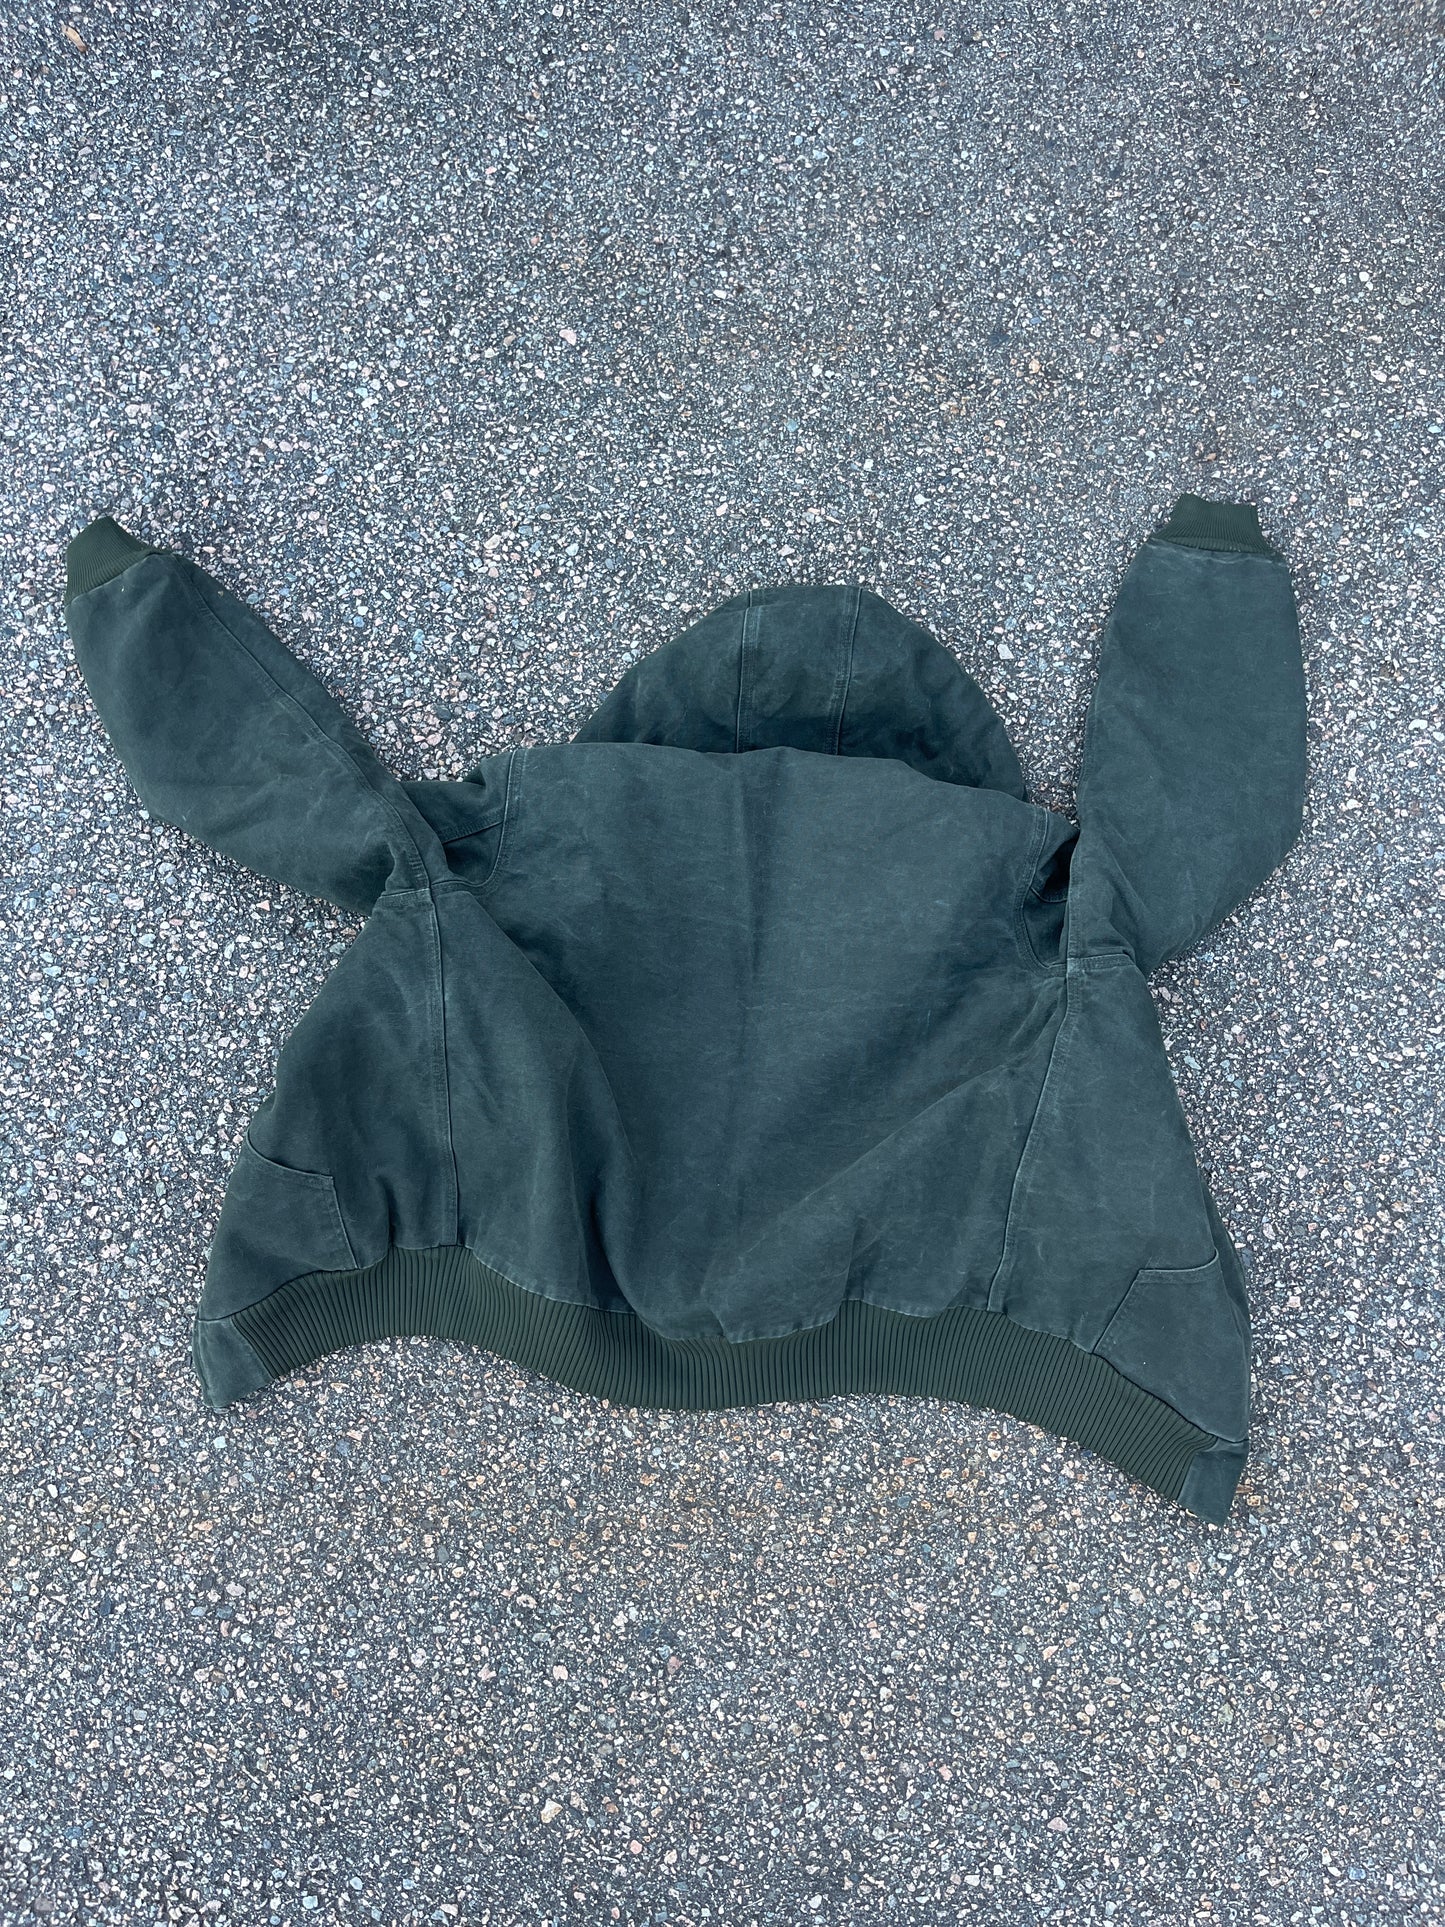 Faded Olive Green Carhartt Active Jacket - Medium